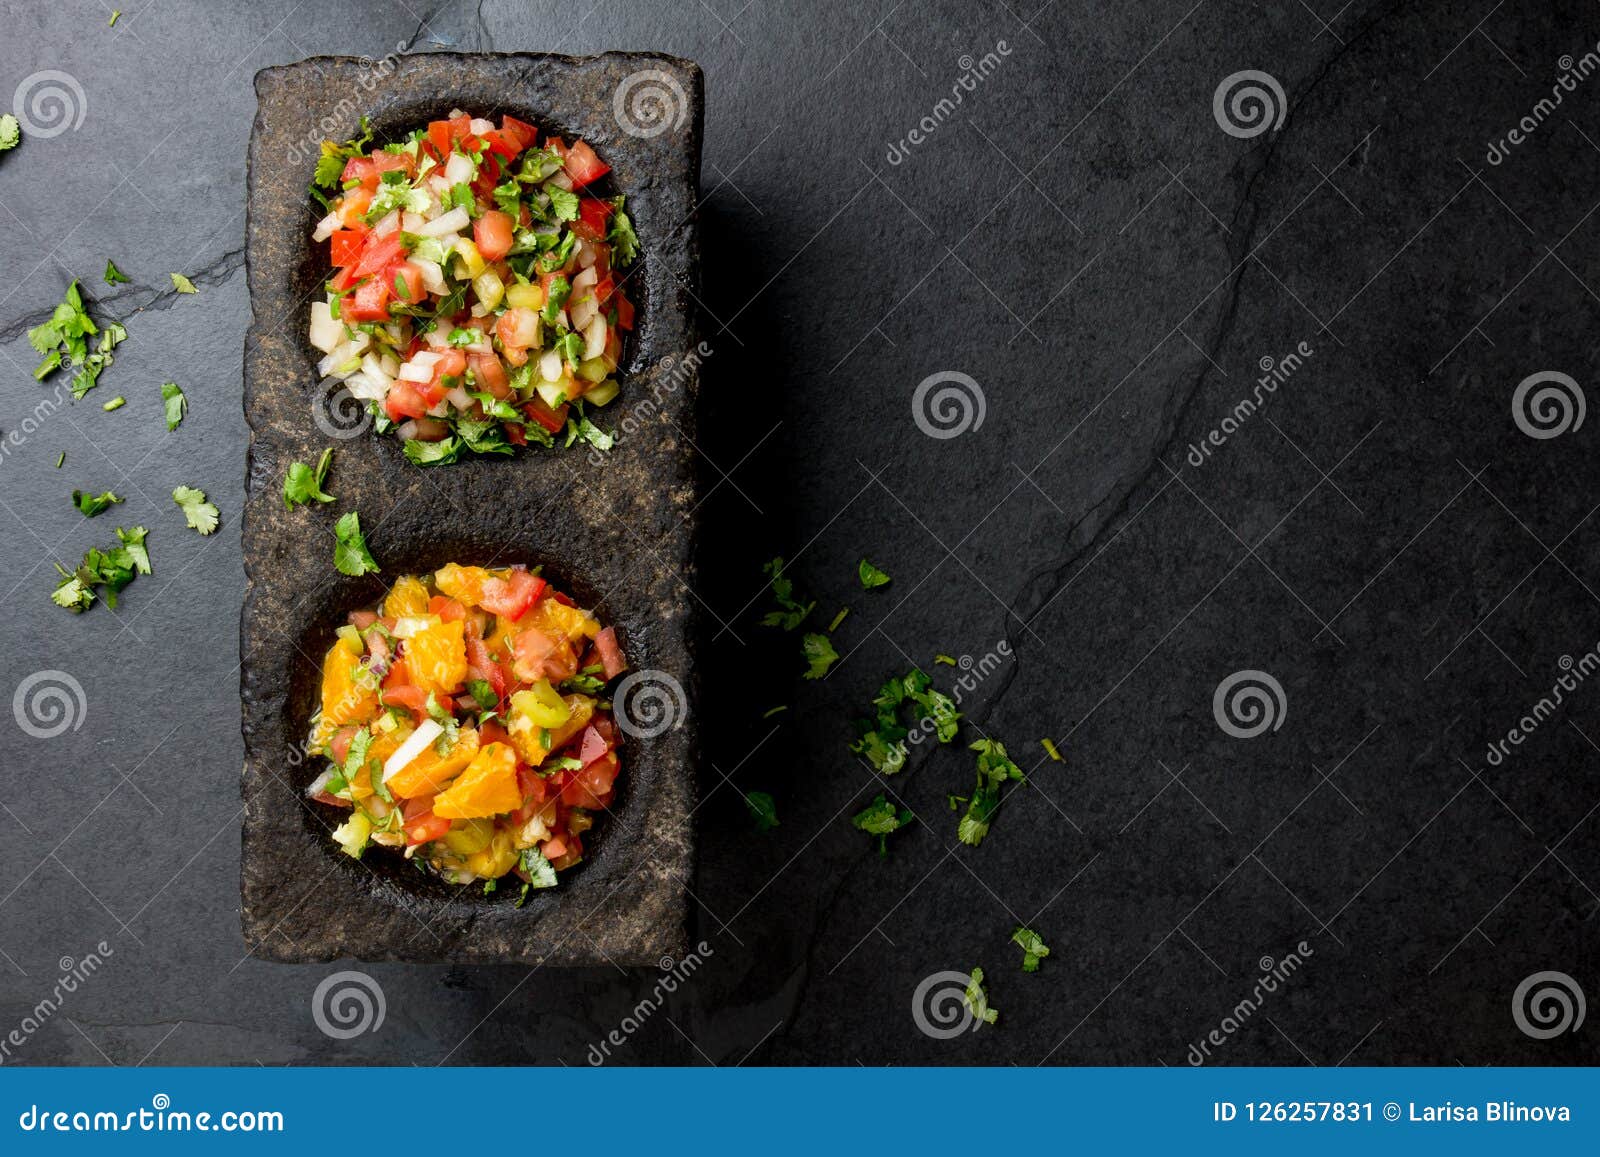 famous mexican sauces salsas - pico de gallo, salsa bandera mexicana in stone mortars on gray slate background